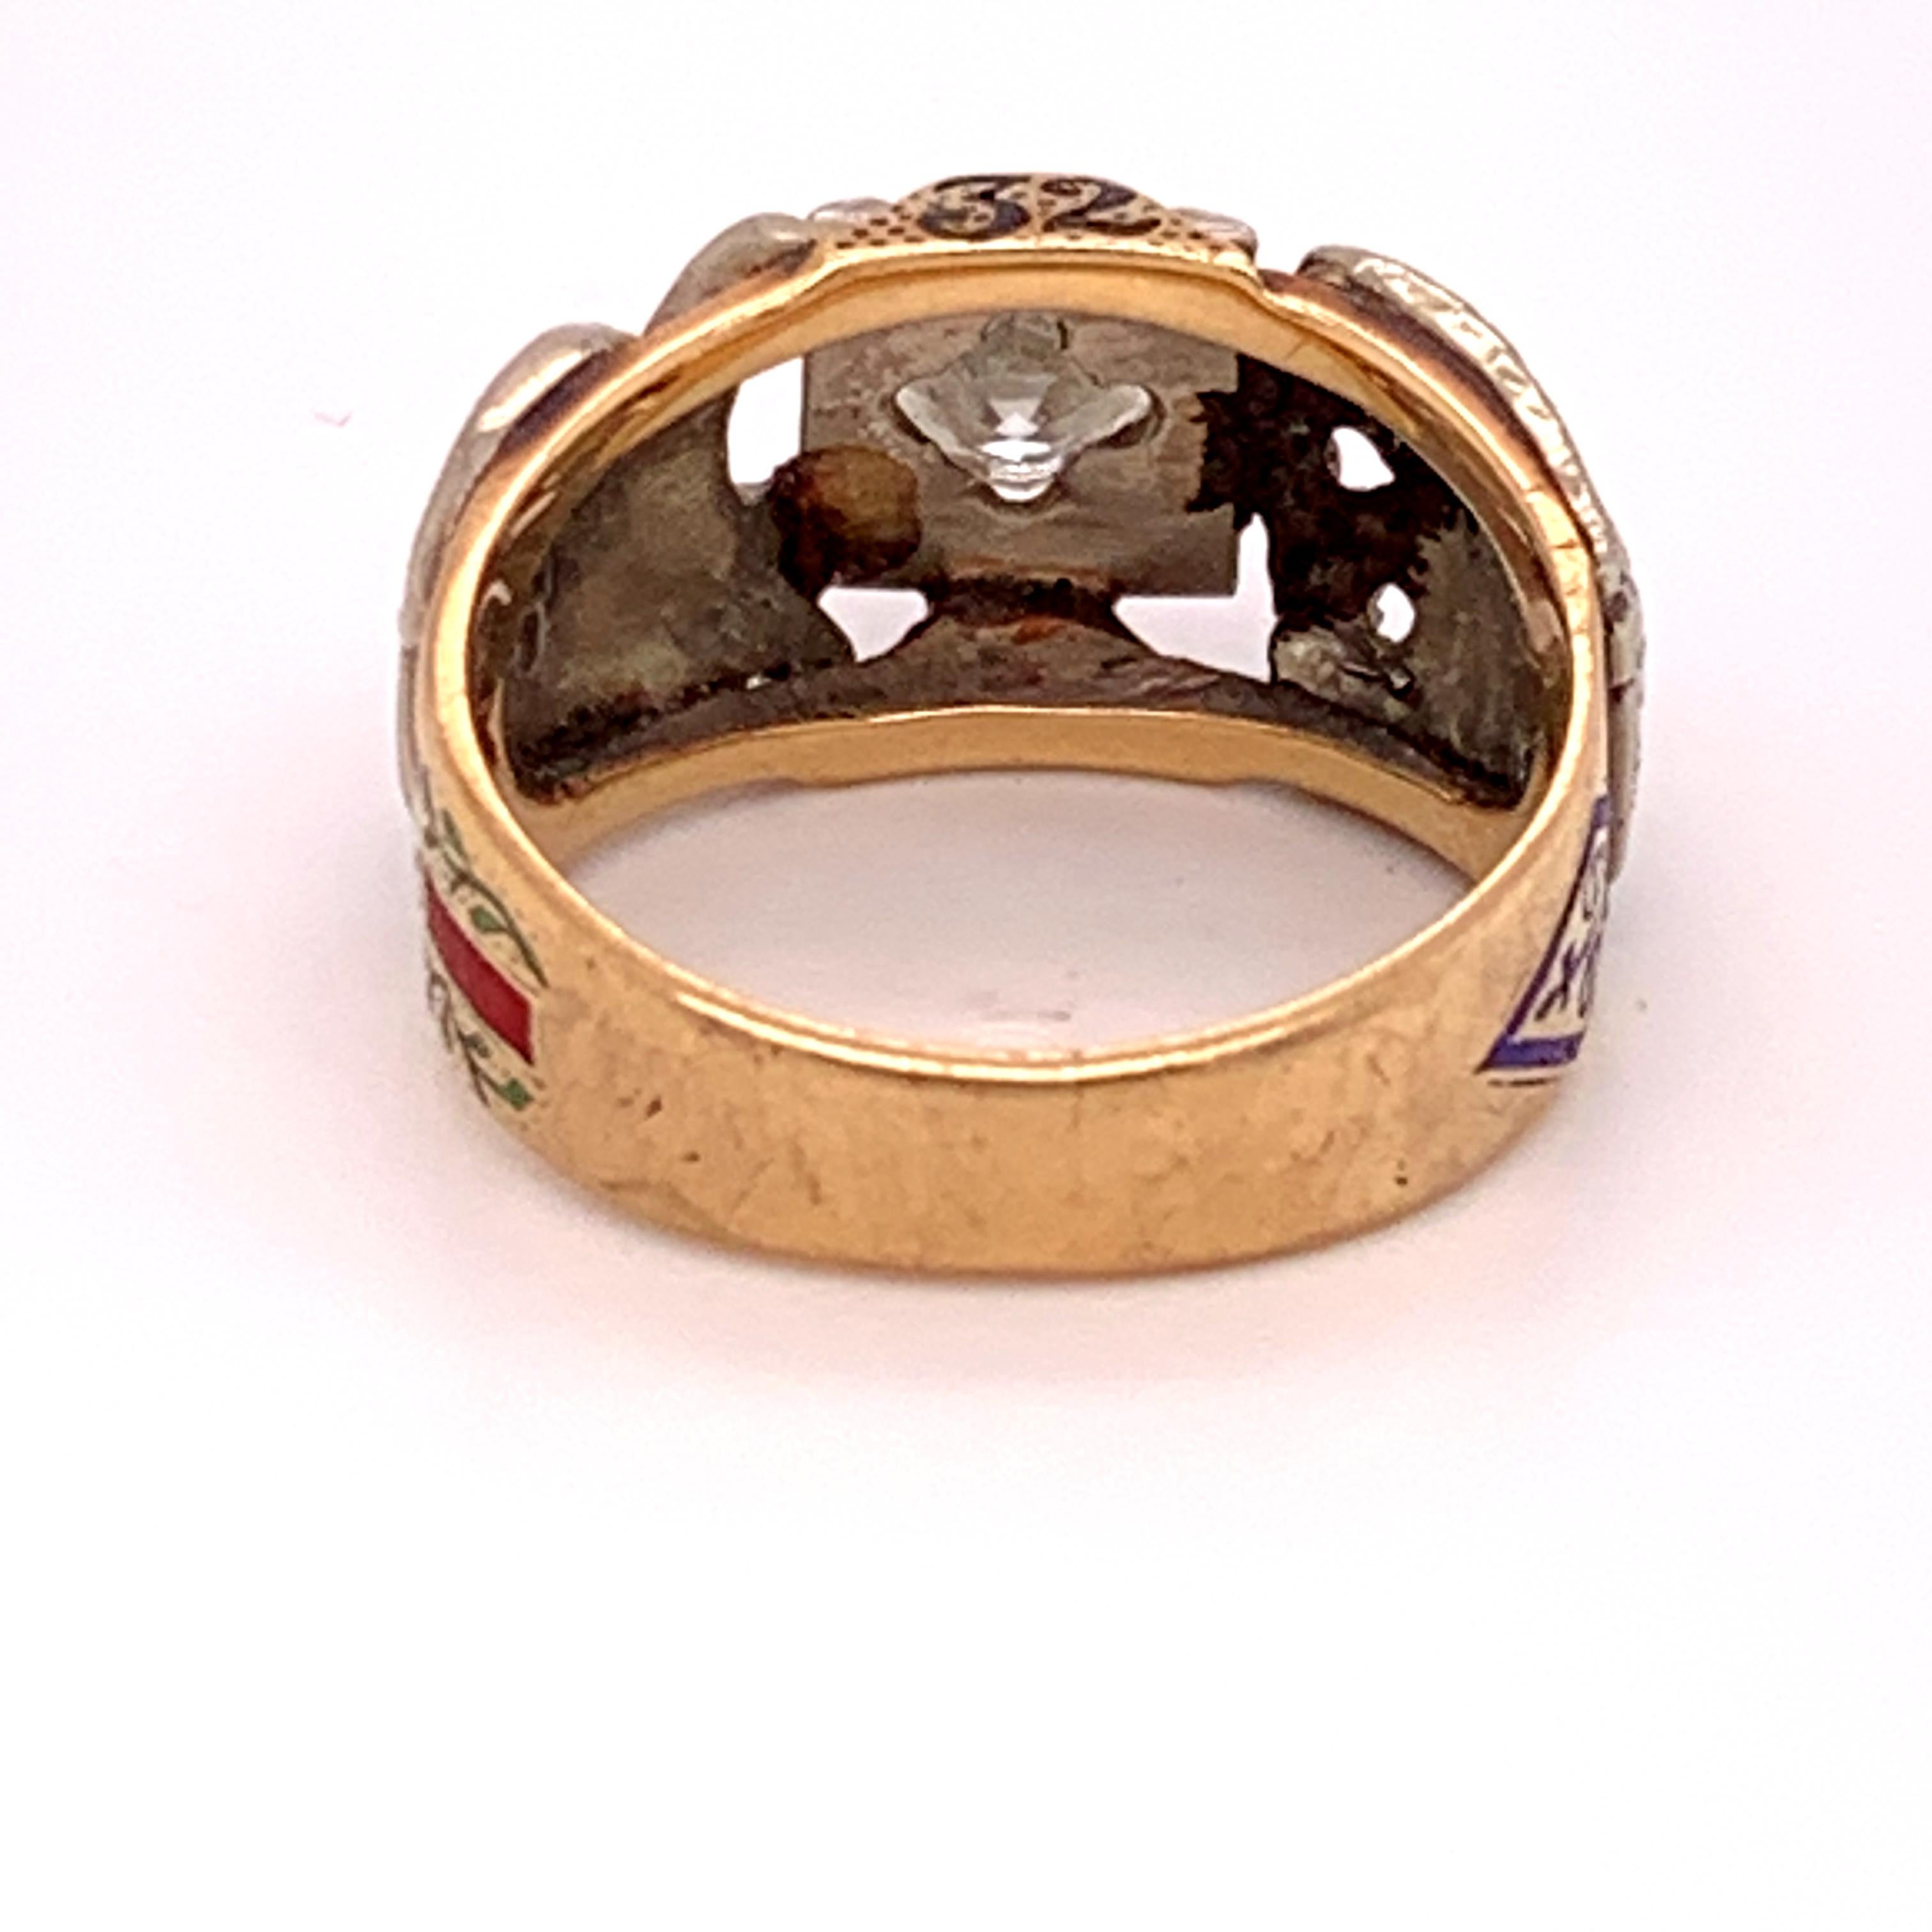 10k gold masonic ring with diamond